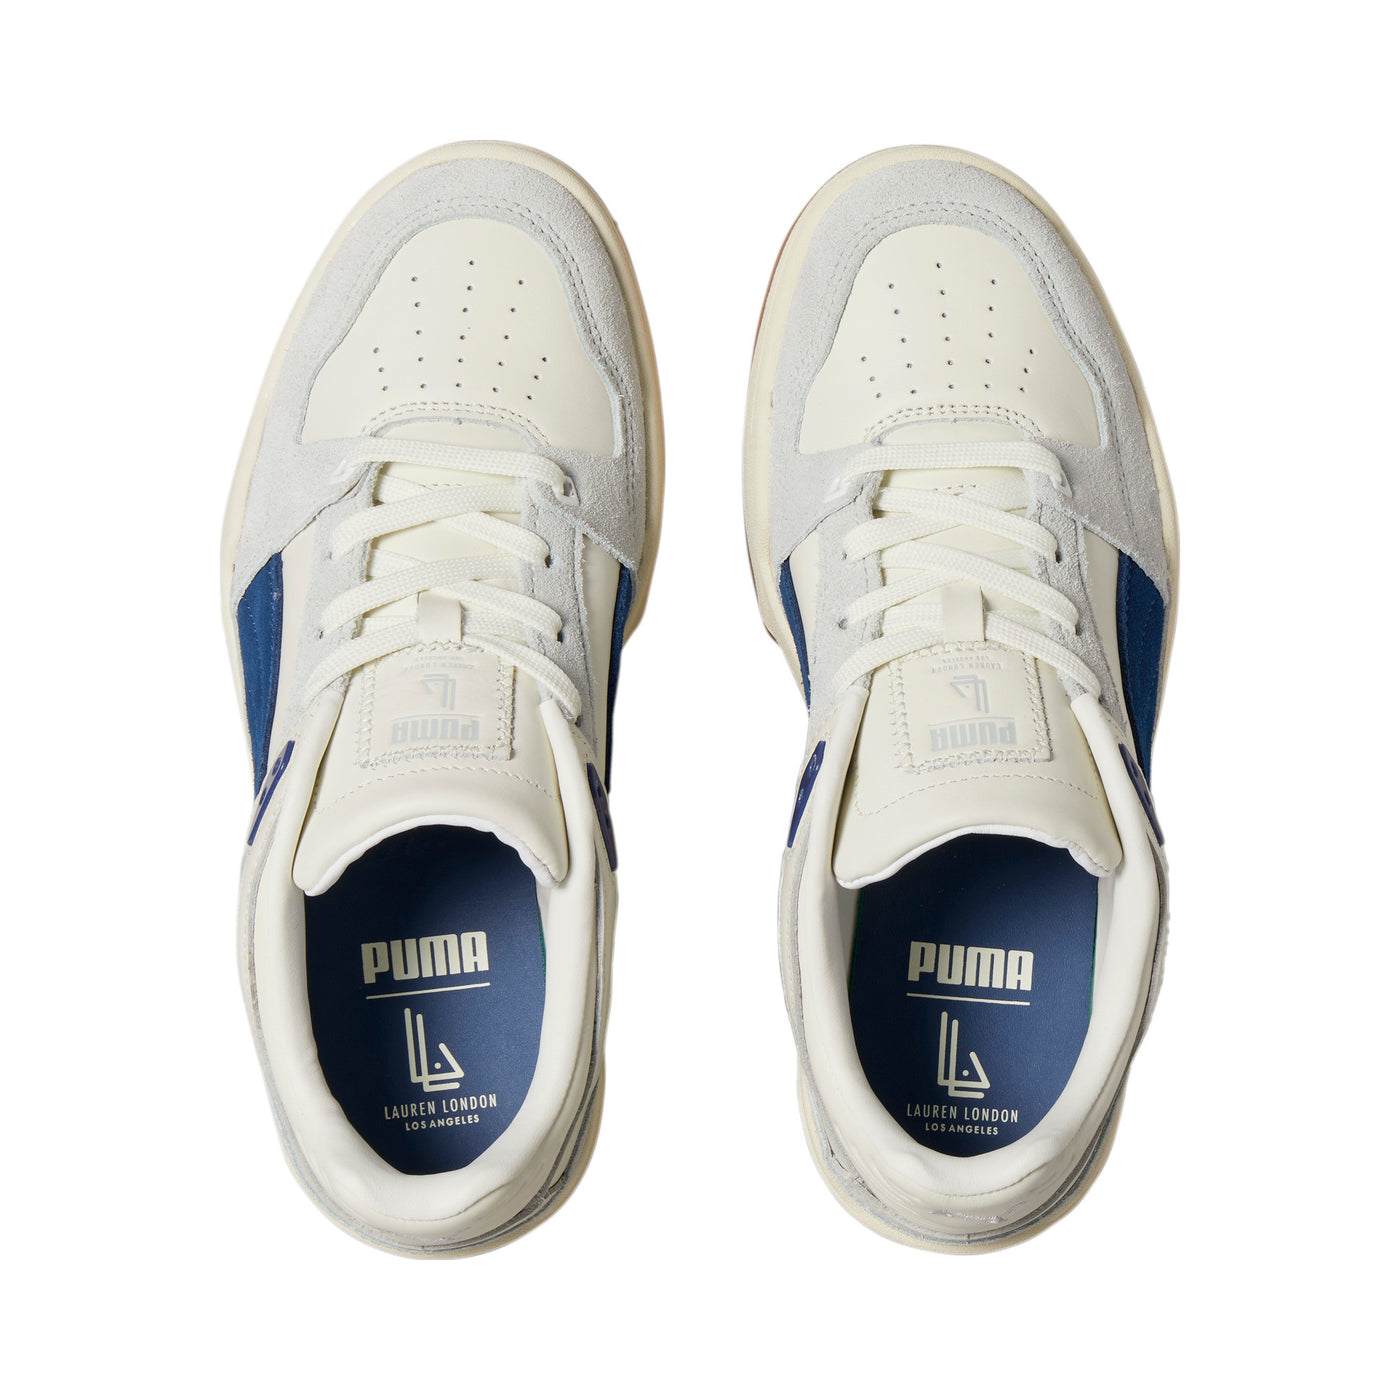 PUMA x Lauren London Slipstream Big Kids' Sneakers - Blue - Top